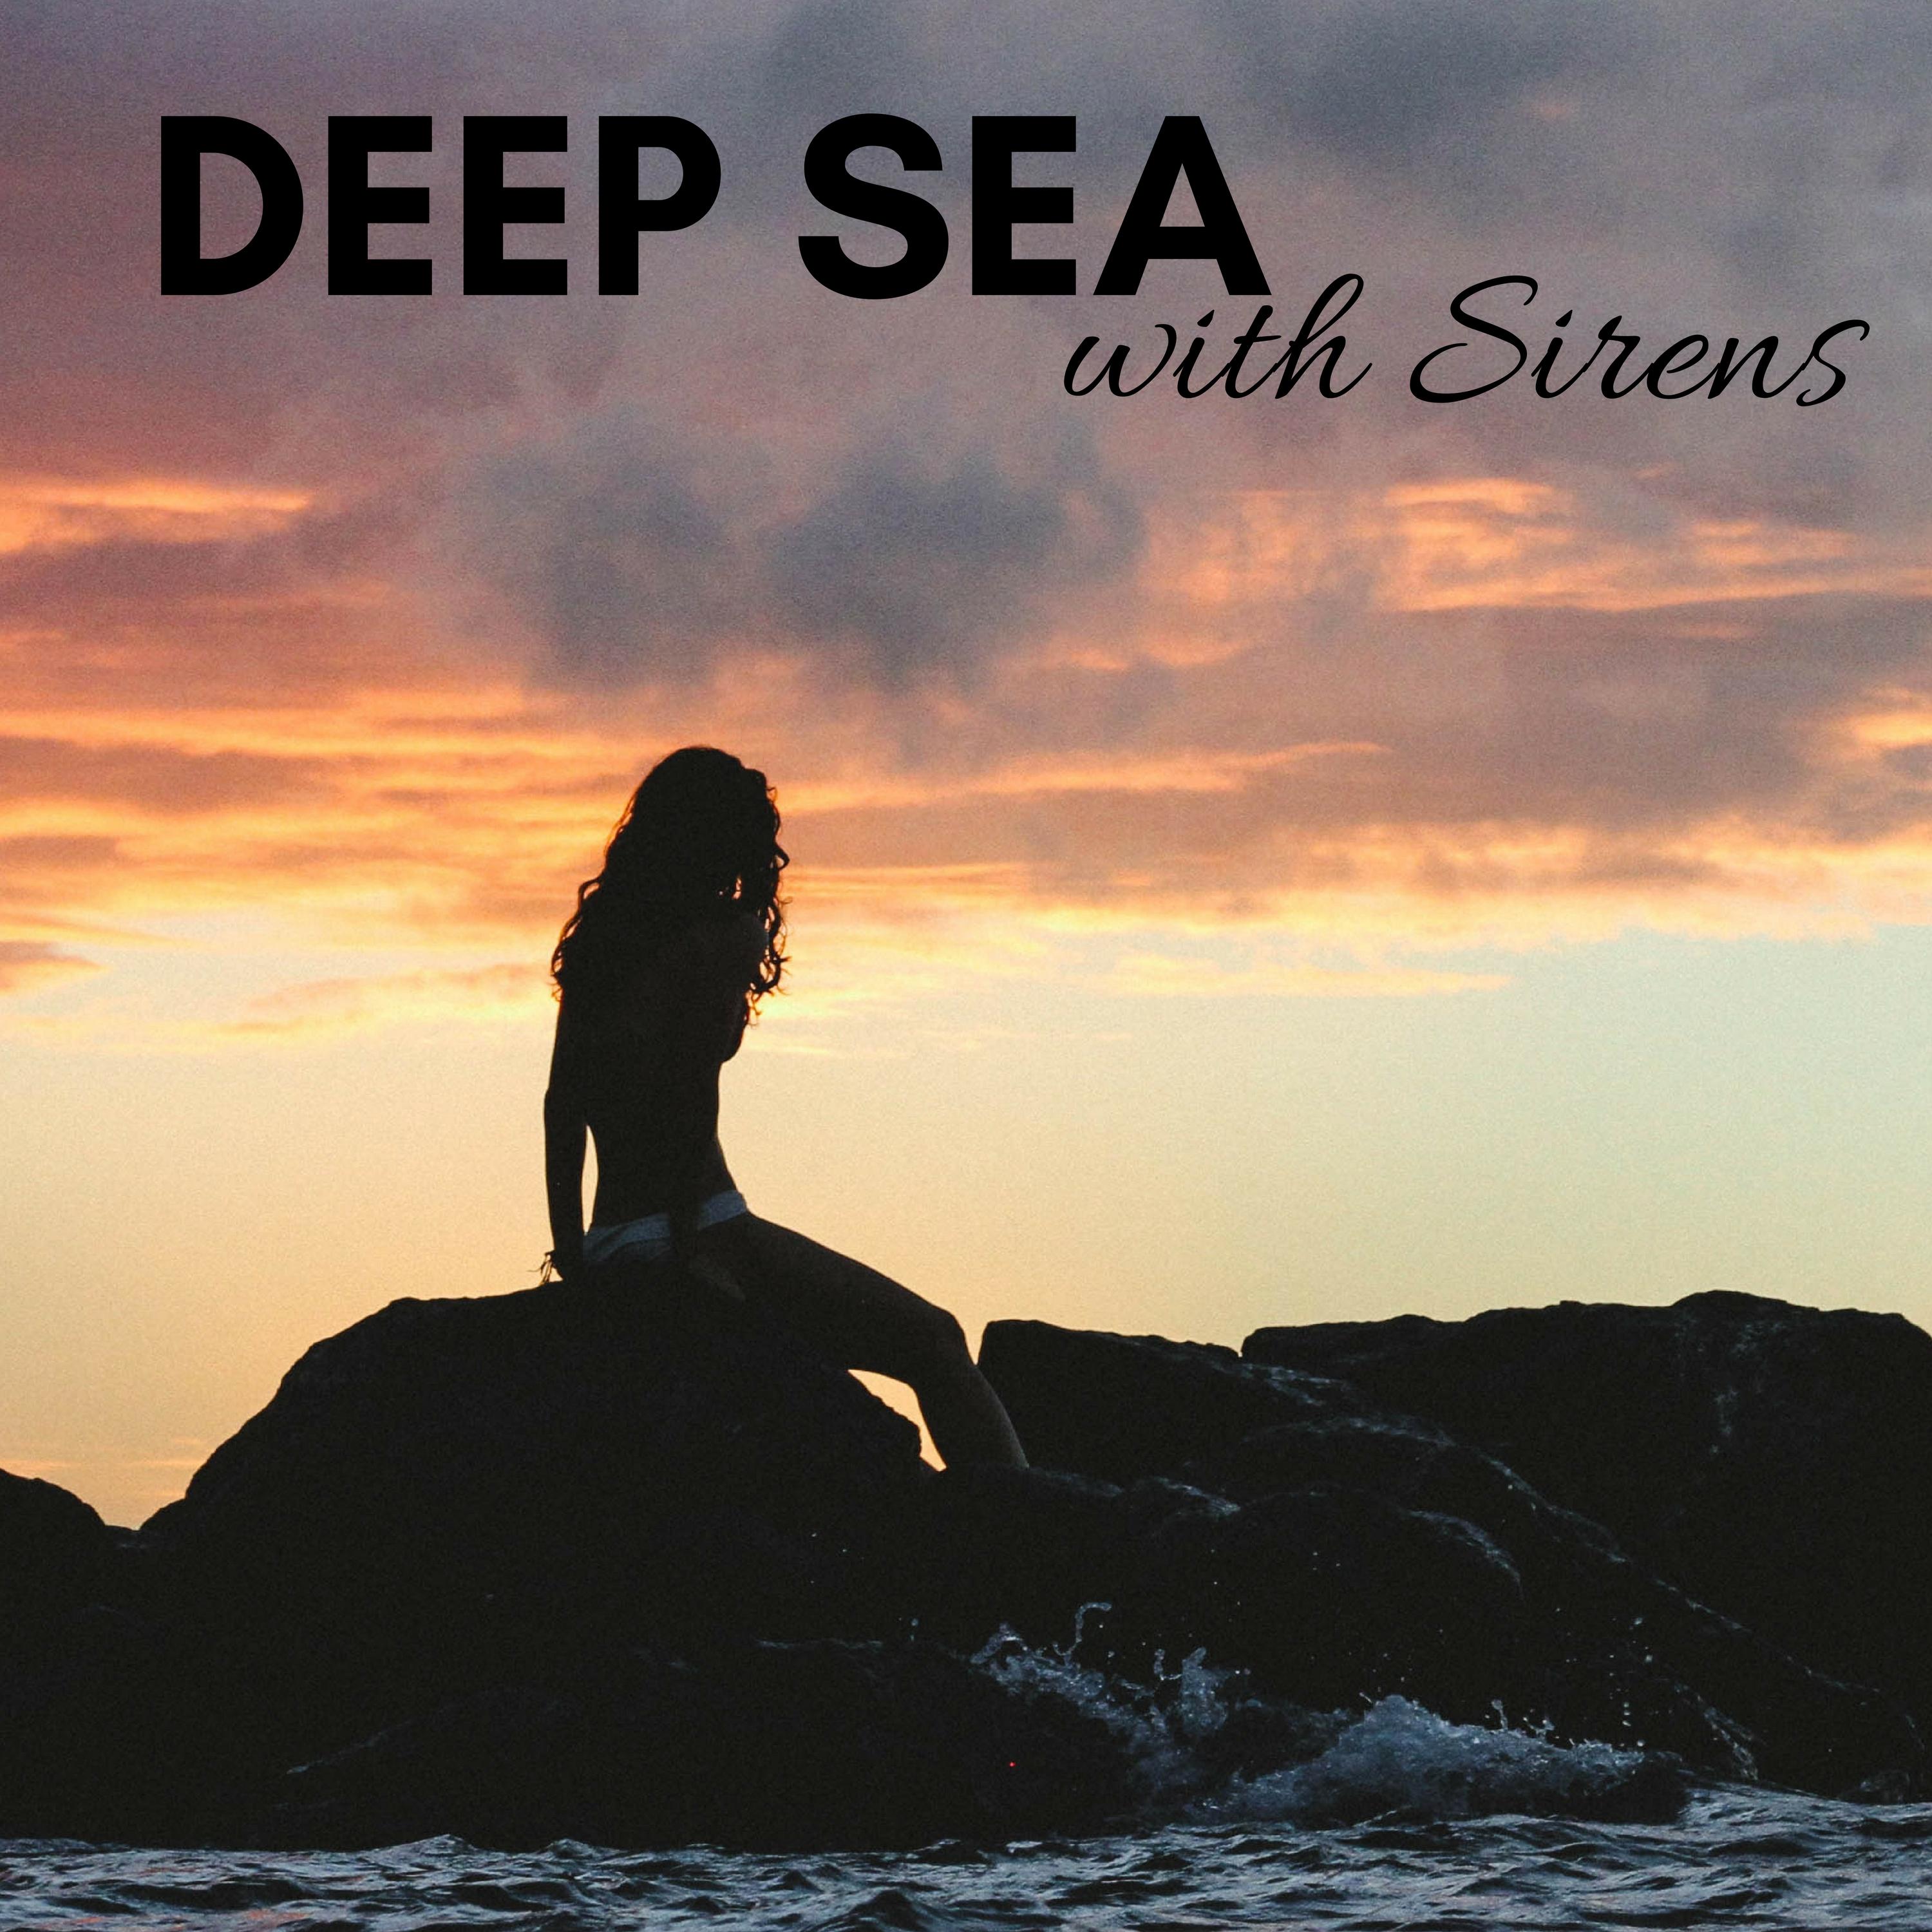 Deep Sea with Sirens - Sleeping Music, Water Sounds